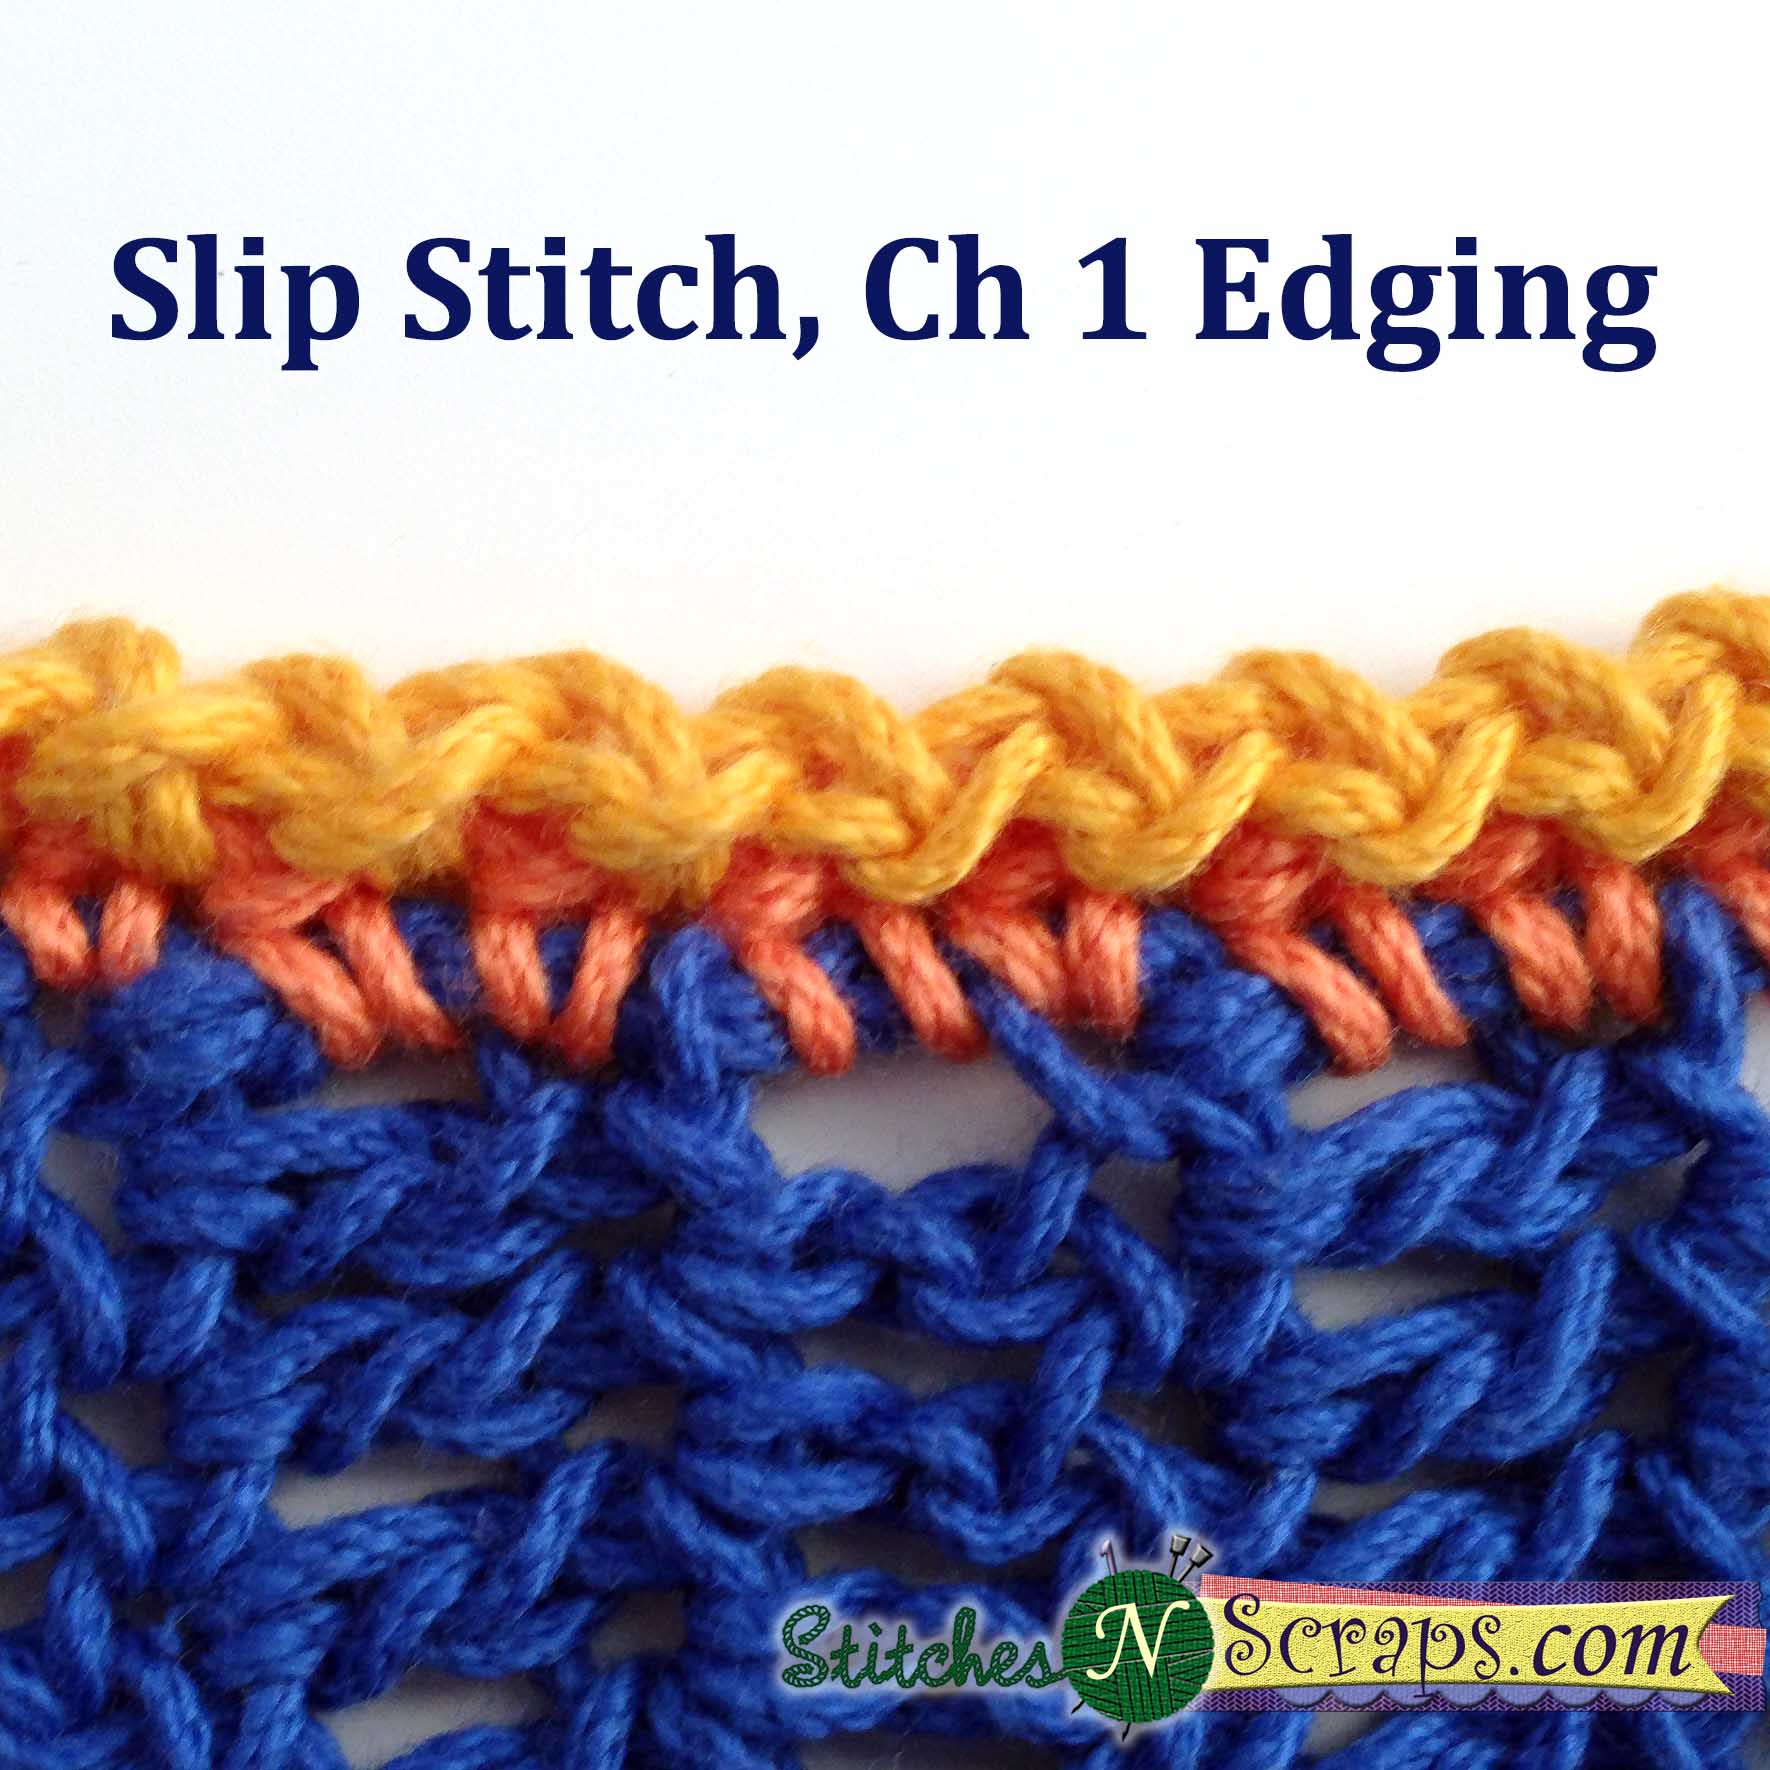 Slip stitch edgings - StitchesNScraps.com